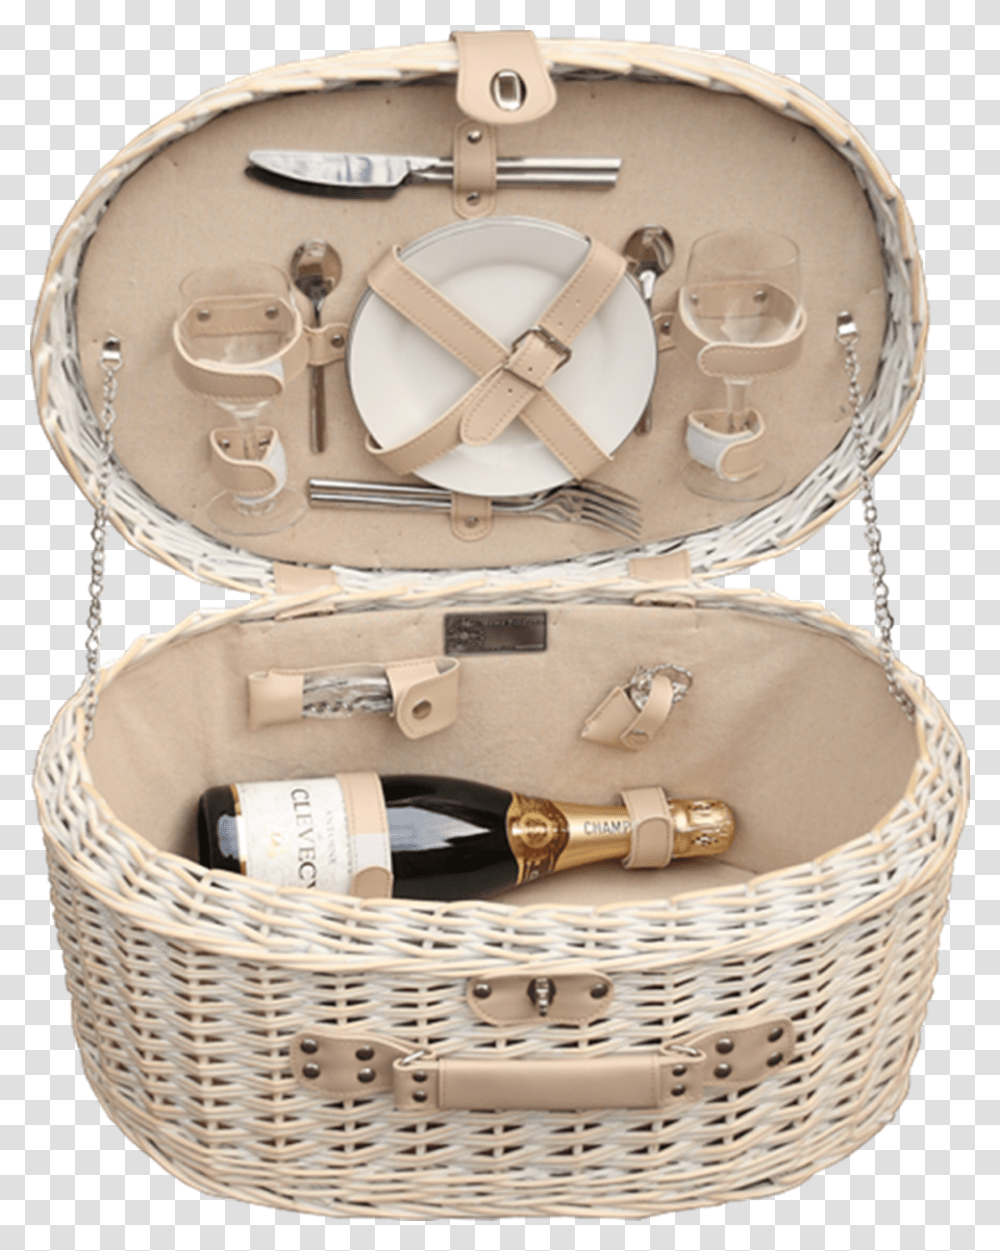 Picnickurv Champagne, Basket, Bottle, Clock Tower, Architecture Transparent Png